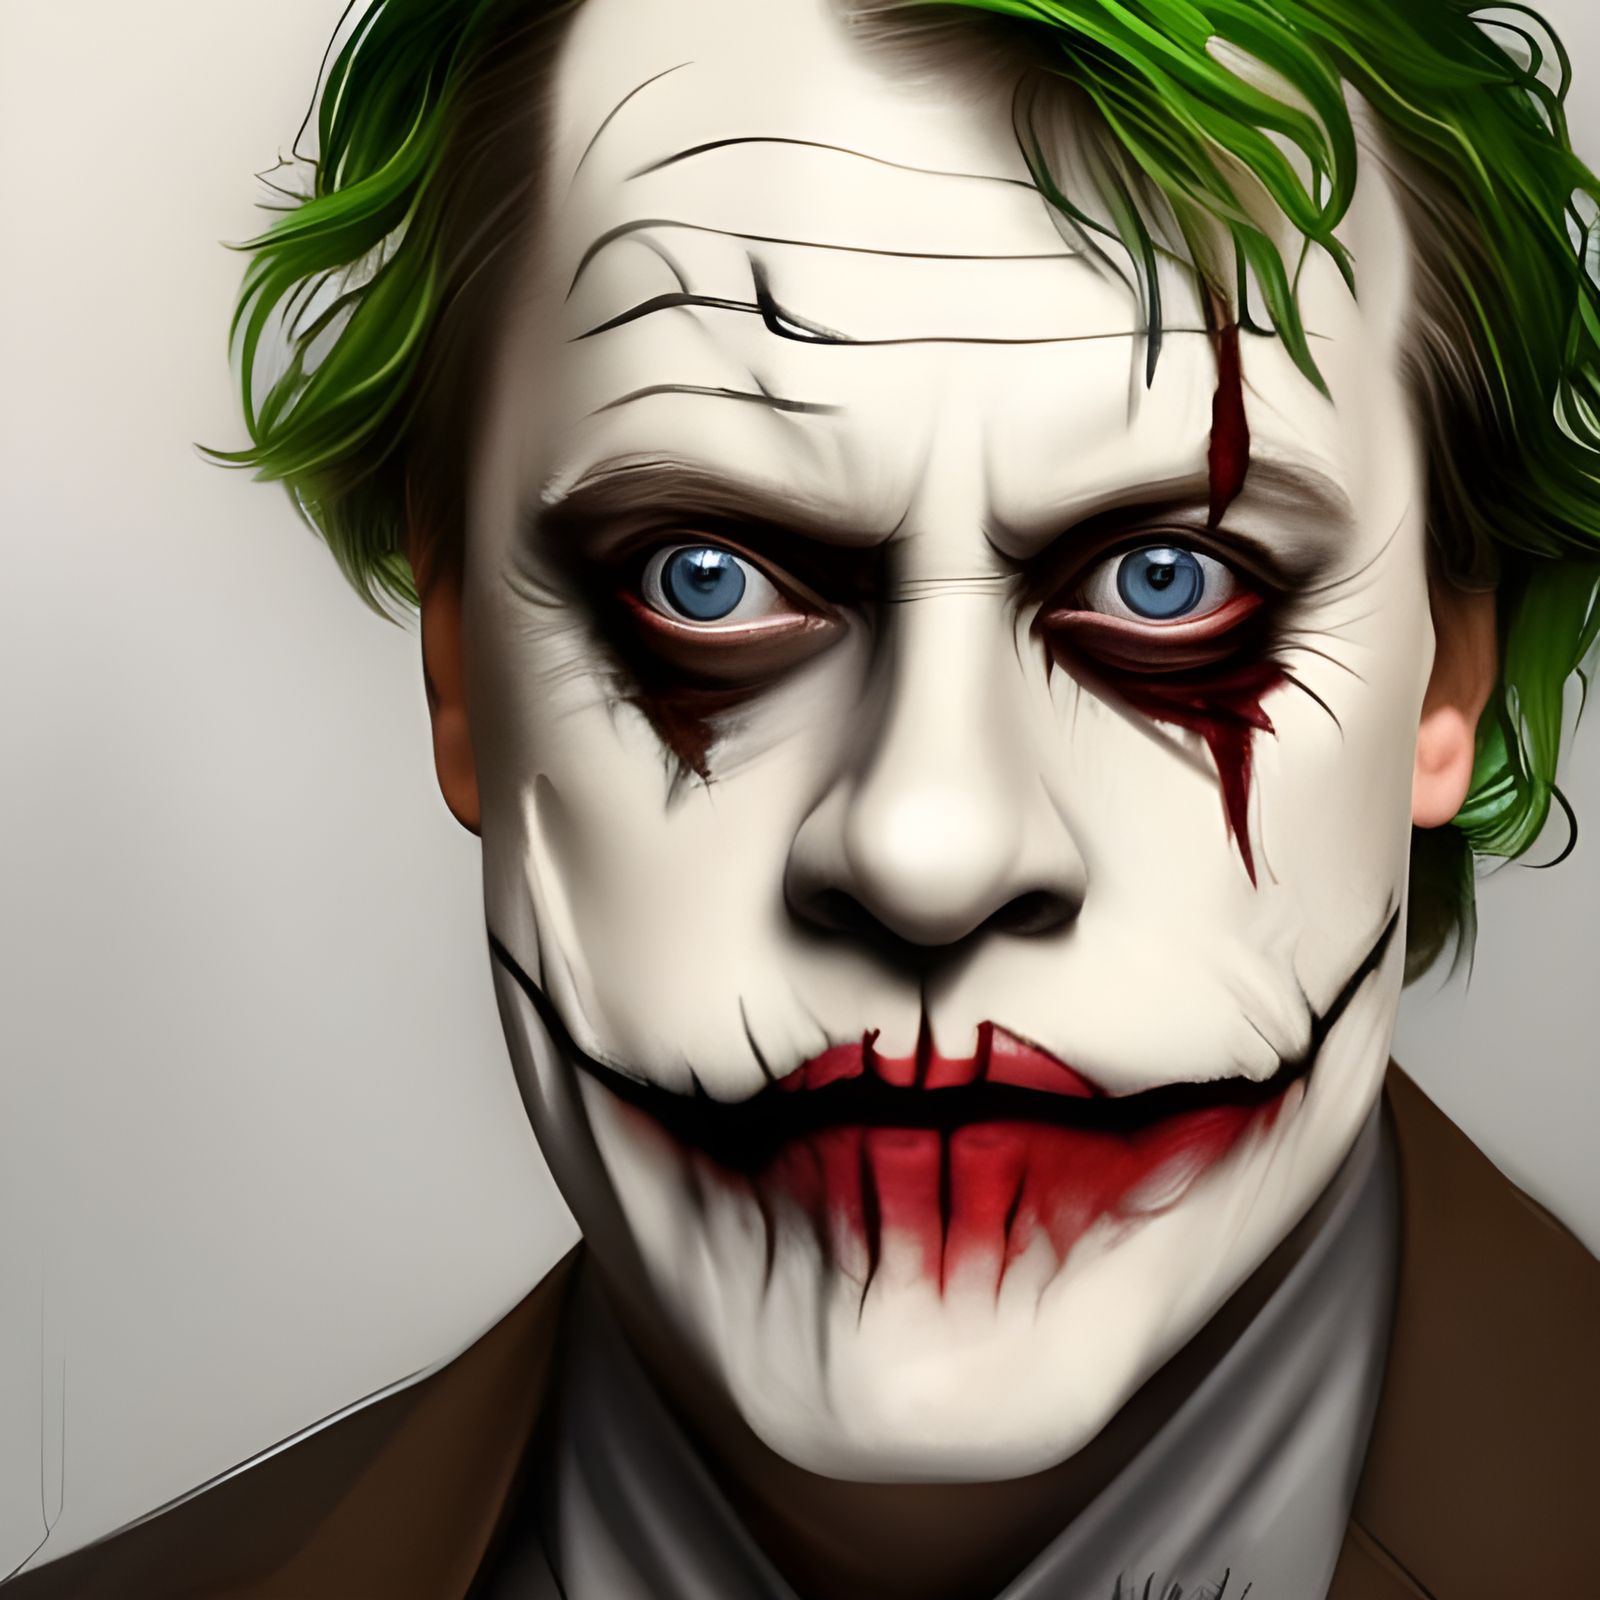 Actor Mark Hamill In The Joker S Makeup